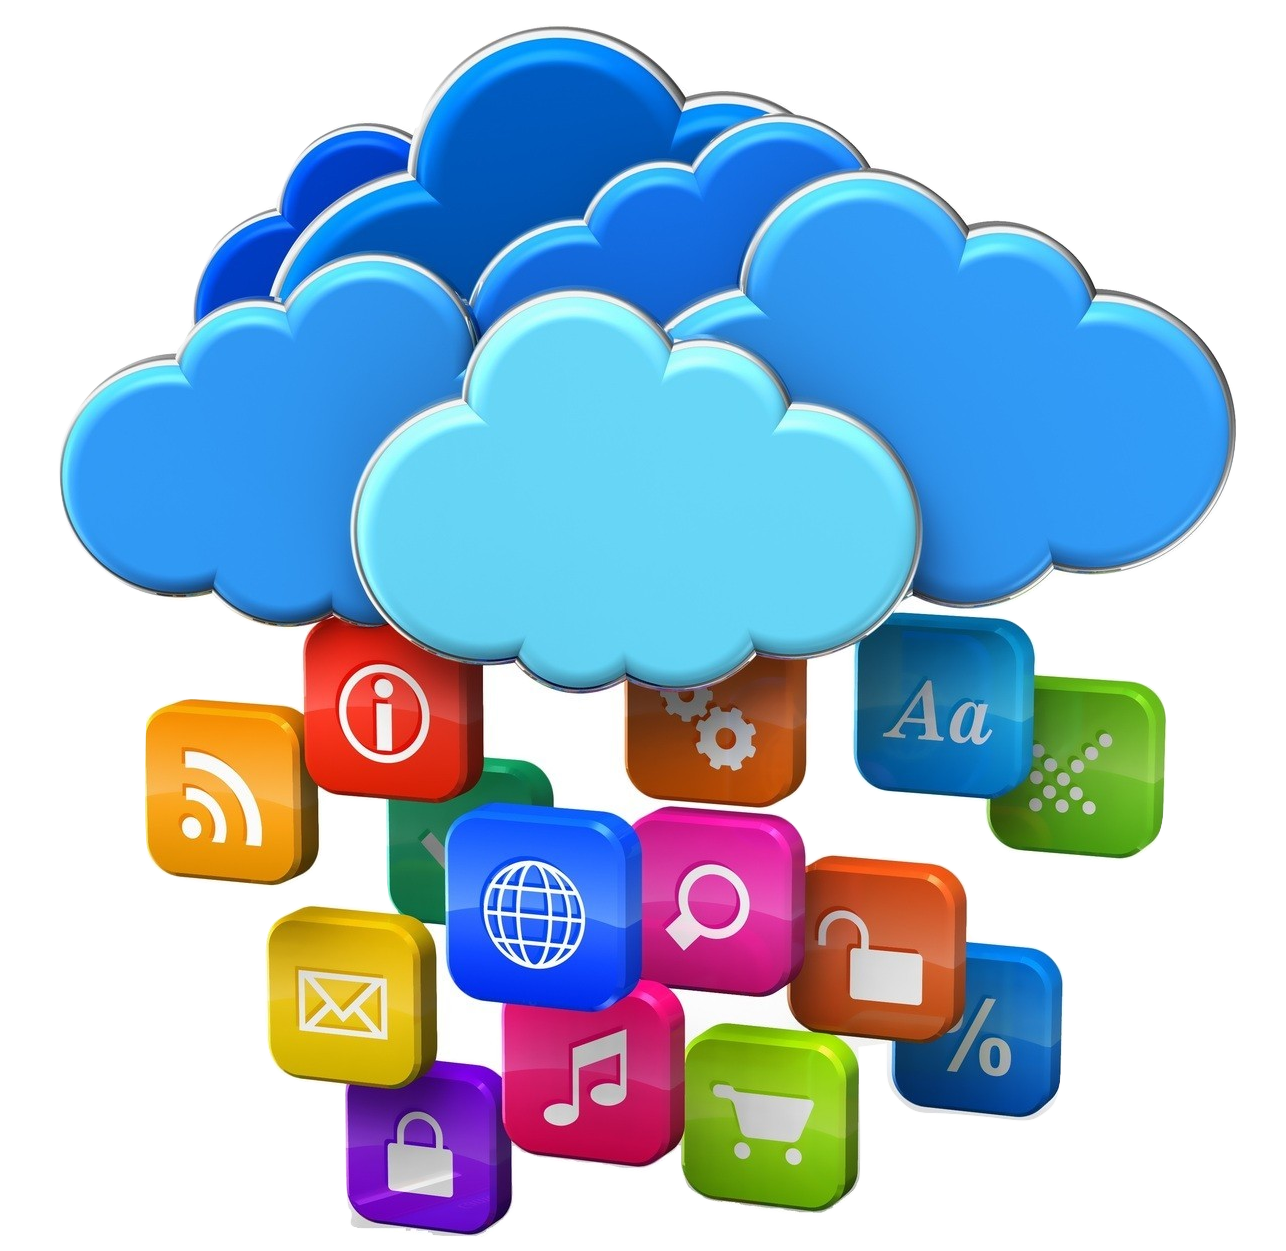 Облако телефон реалми. Облачные технологии. Облачные вычисления. Облачные технологии и облачные вычисления. Технологии облачных вычислений.